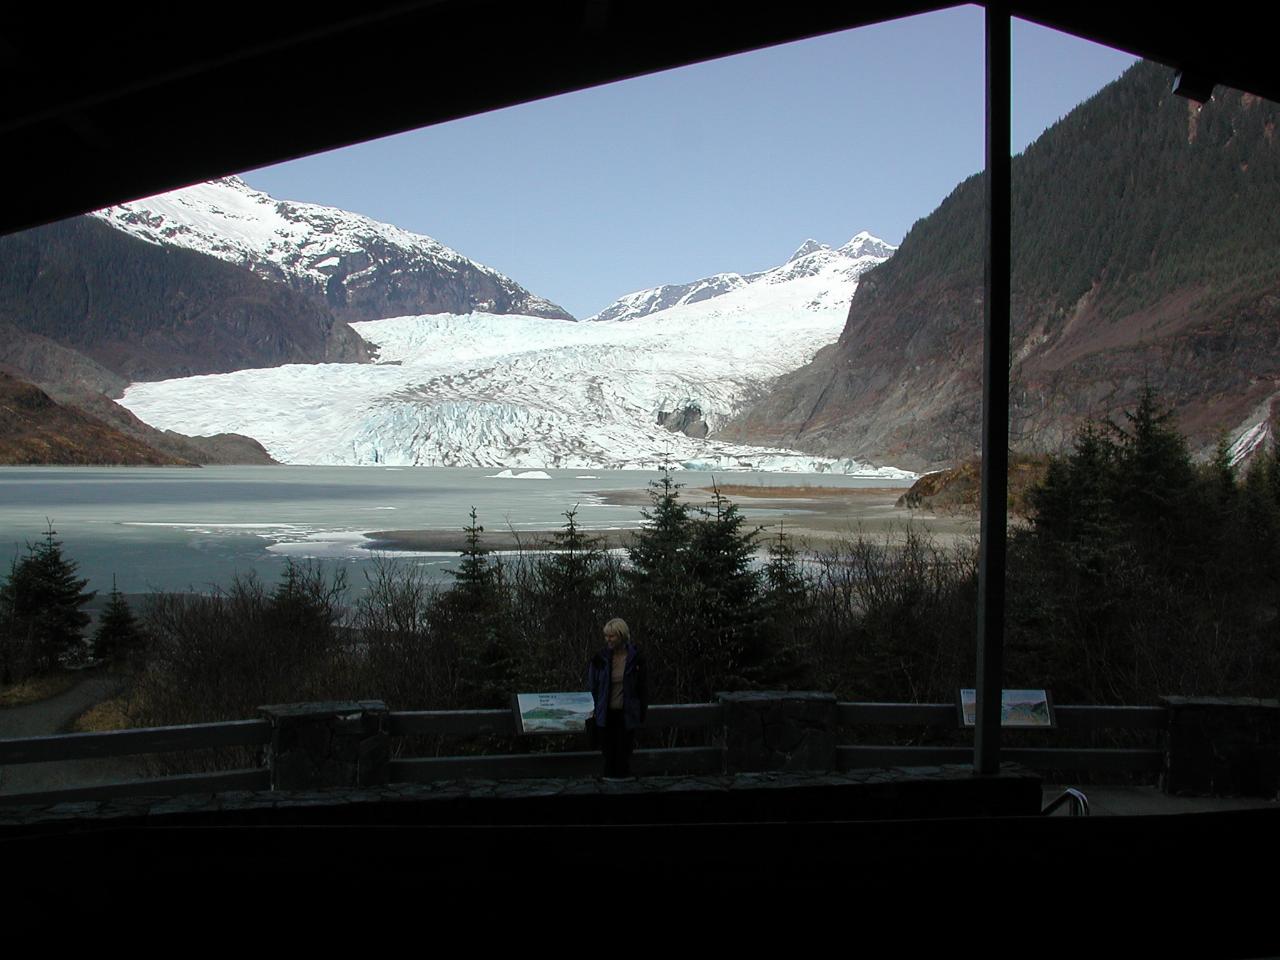 Mendenhall Glacier, just outside Juneau